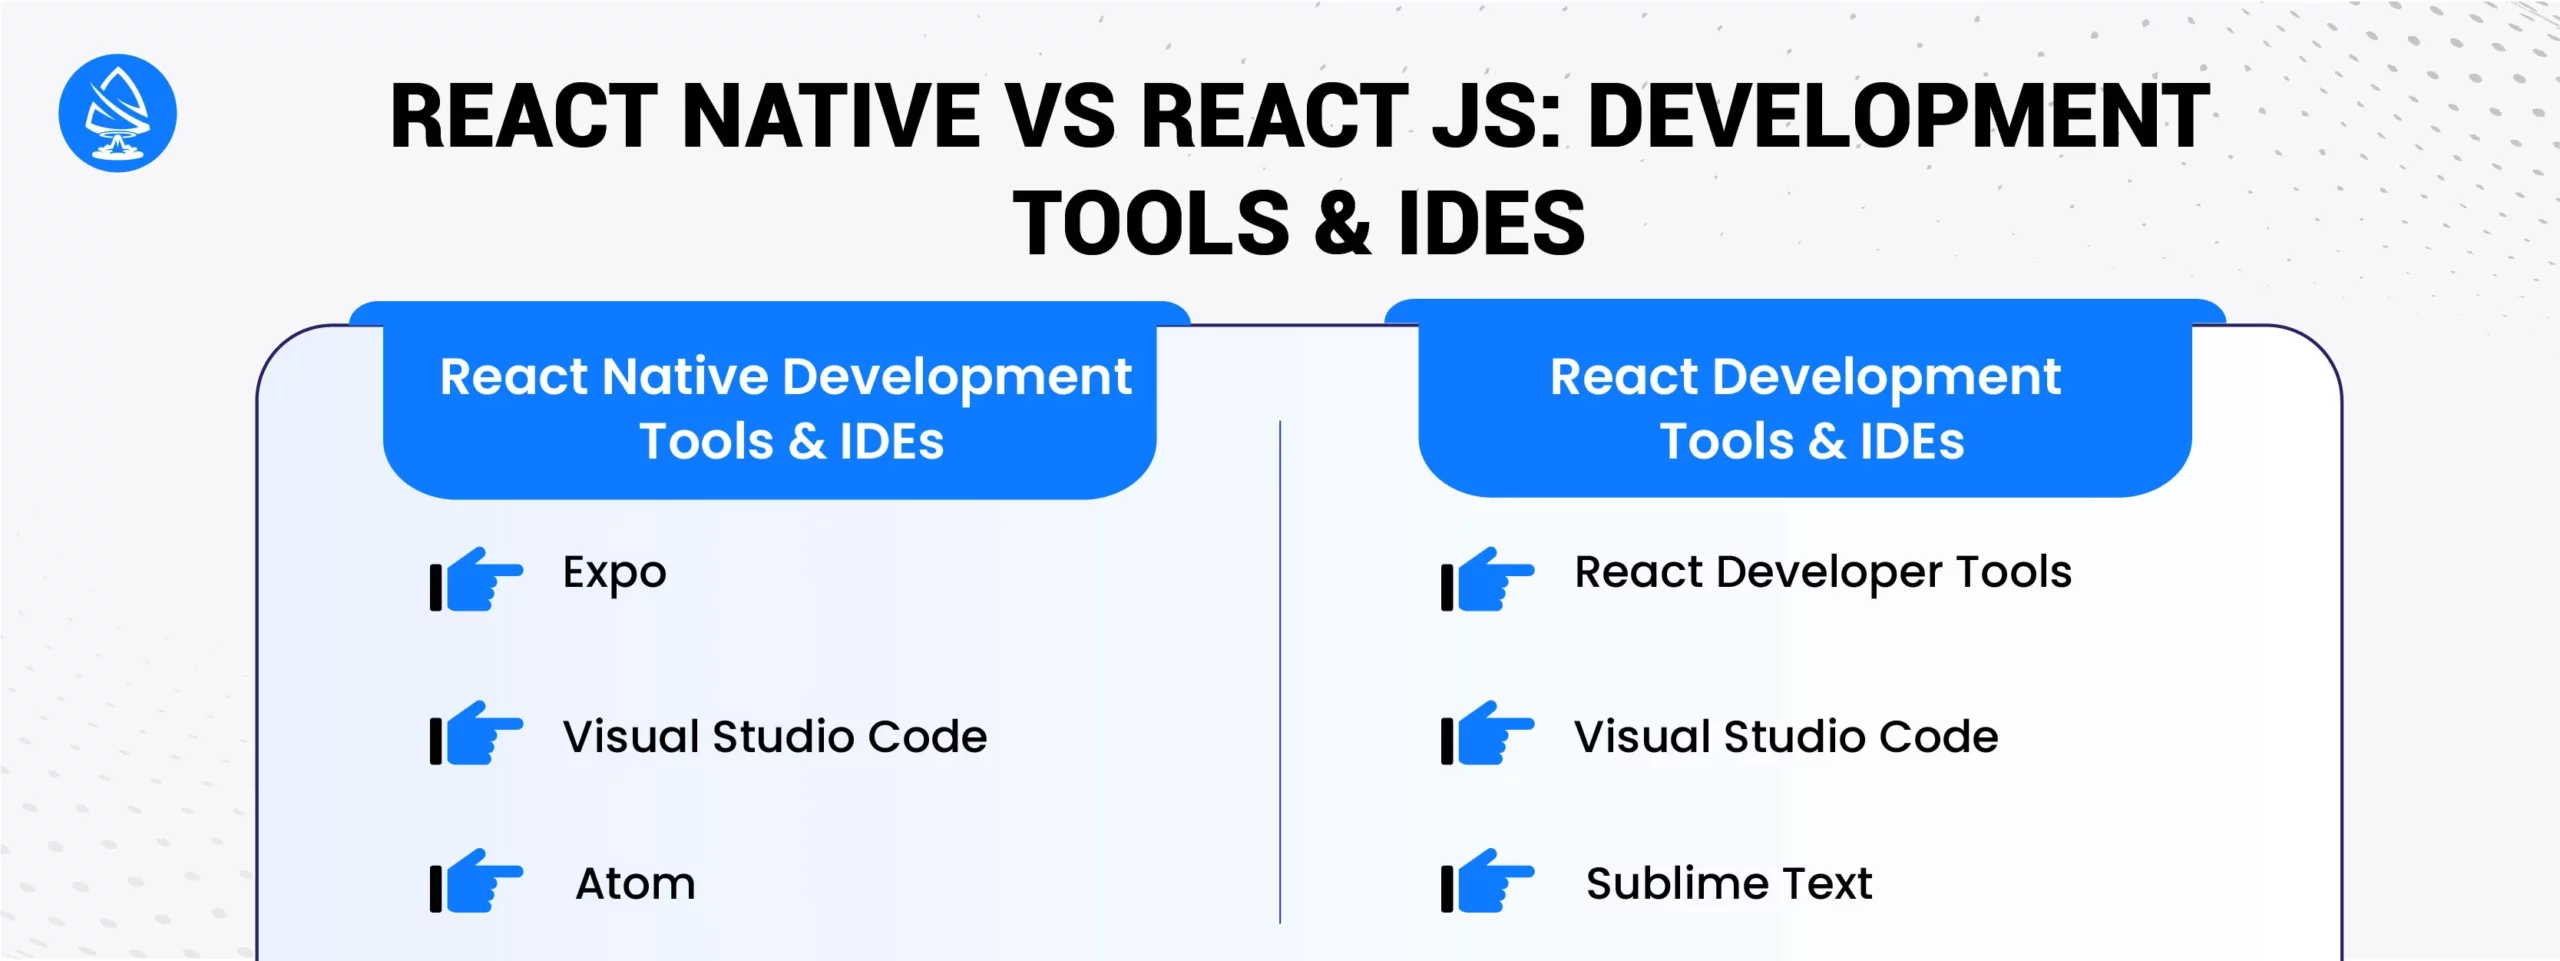 React vs React Native: Development Tools and IDEs